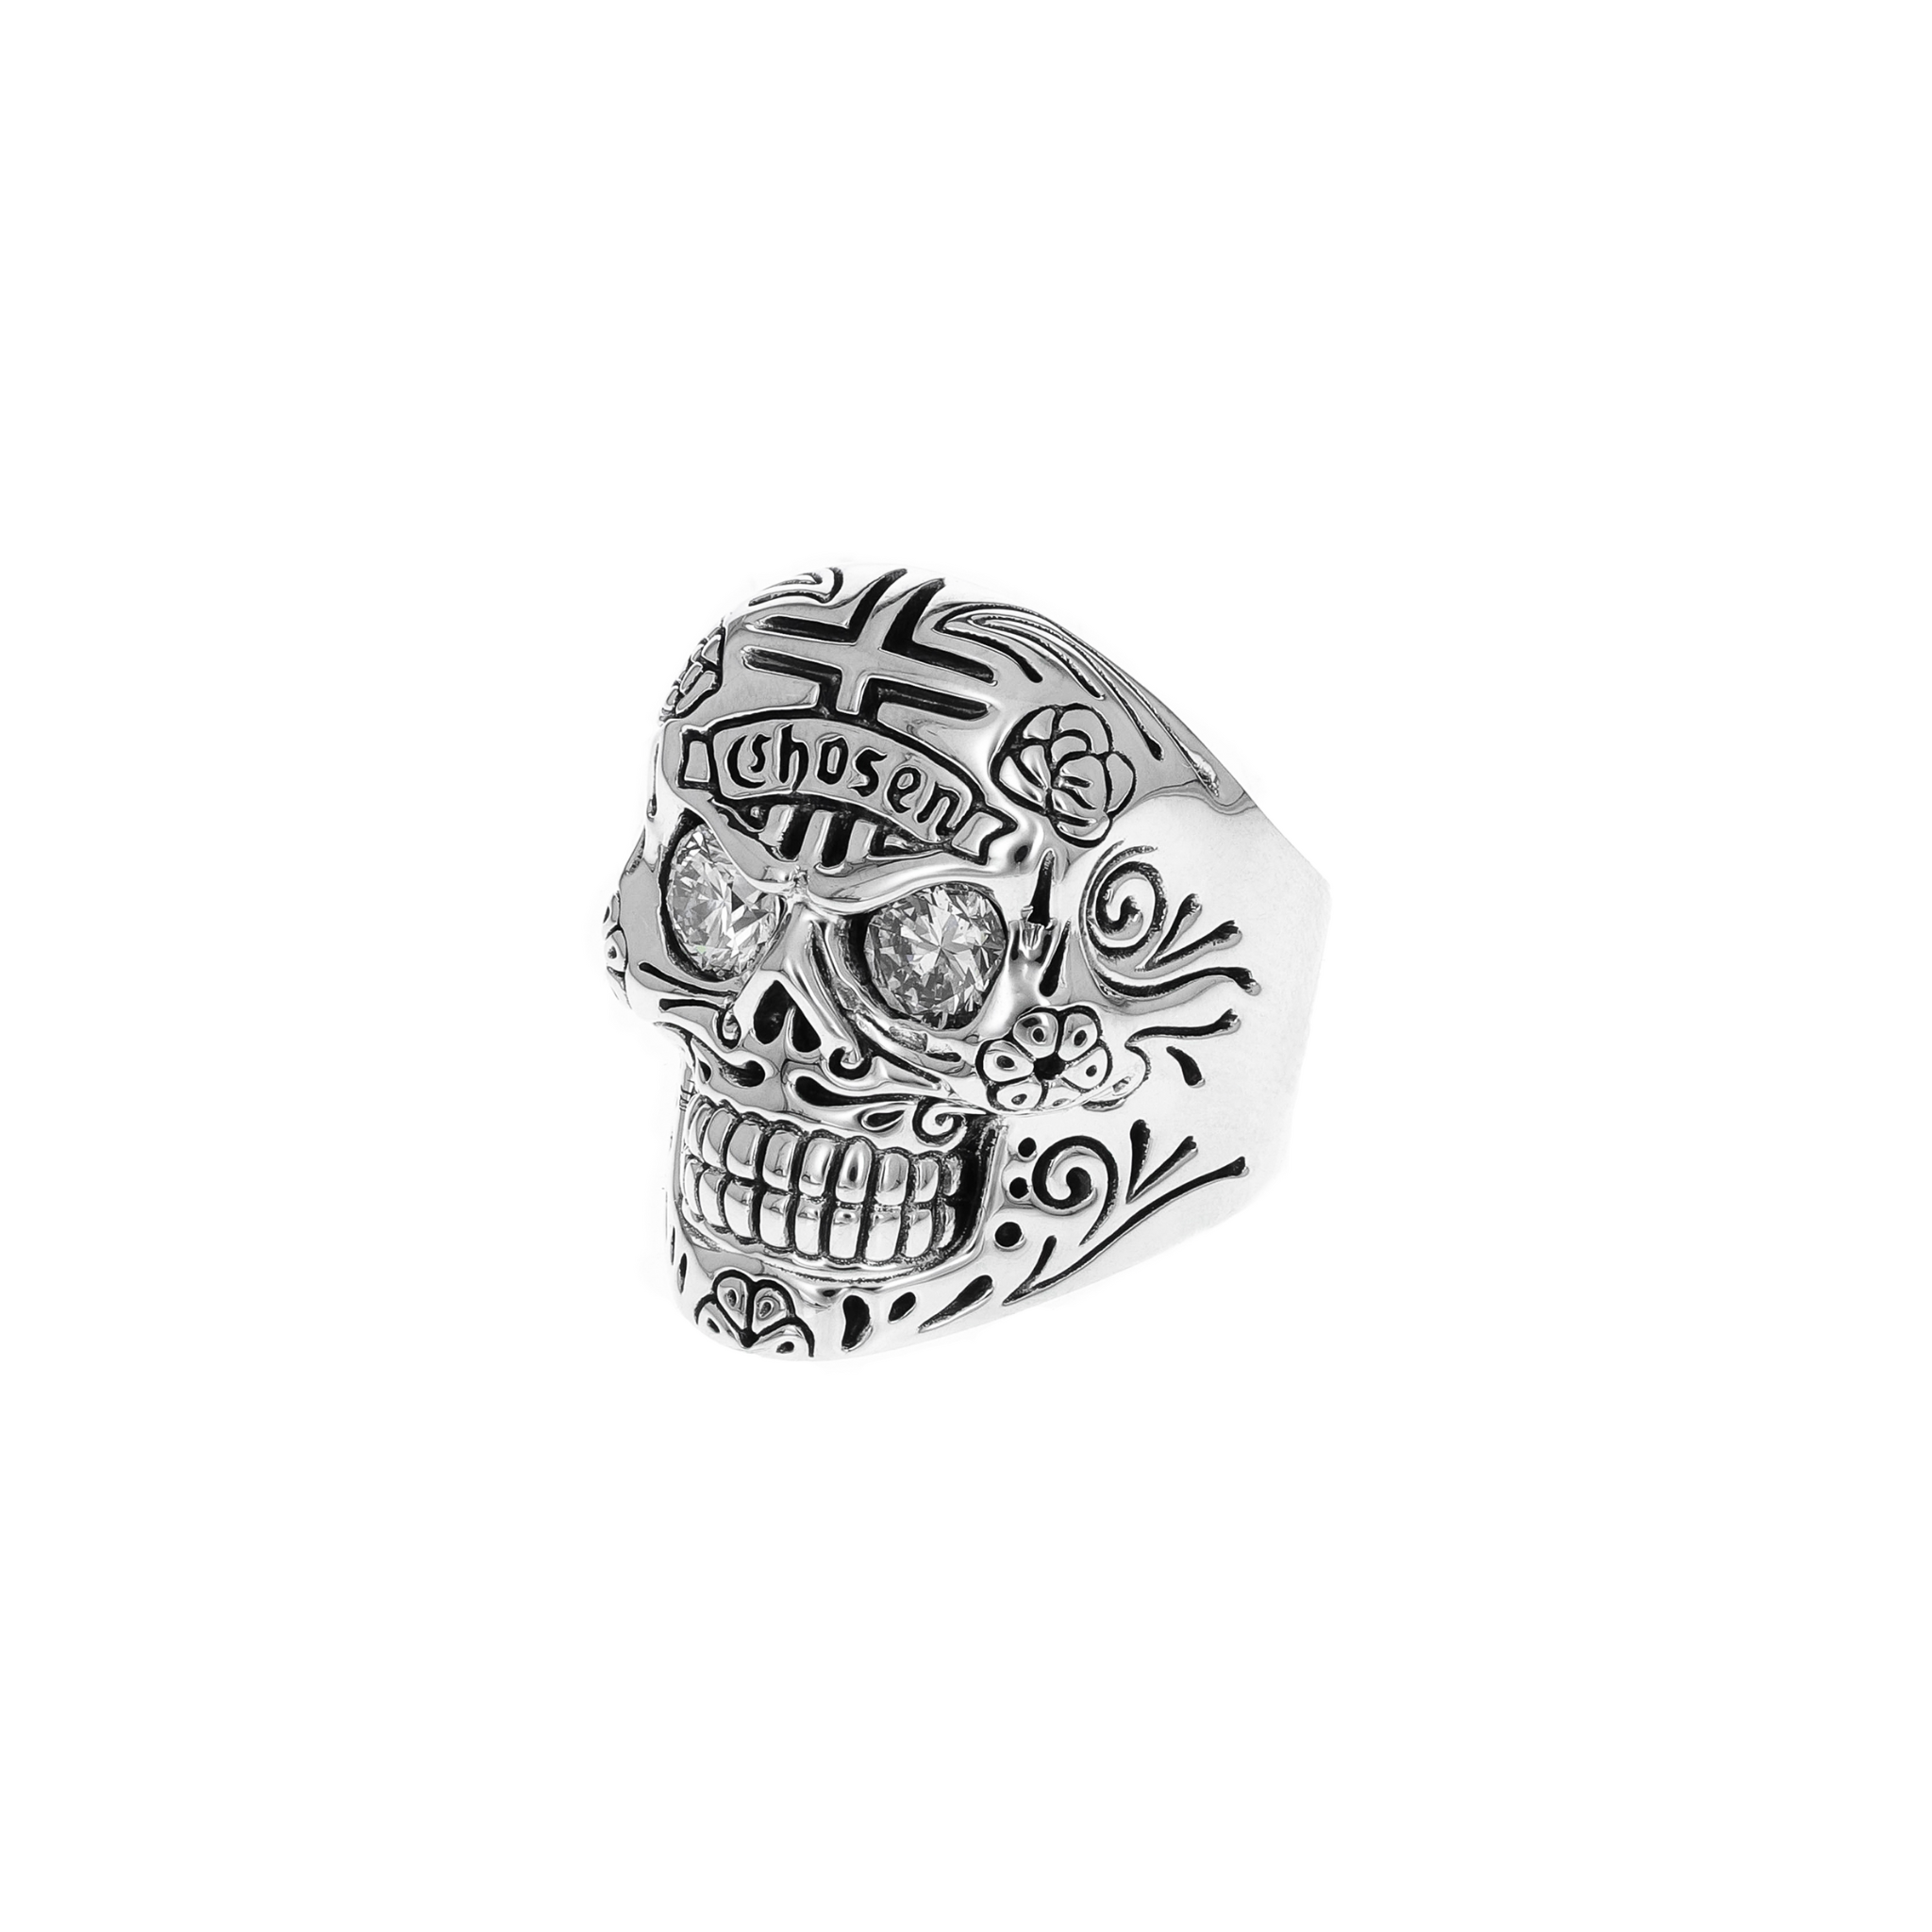 Skull Ring with Chosen Cross Detail Diamond Eyes (20th anniversary edition)